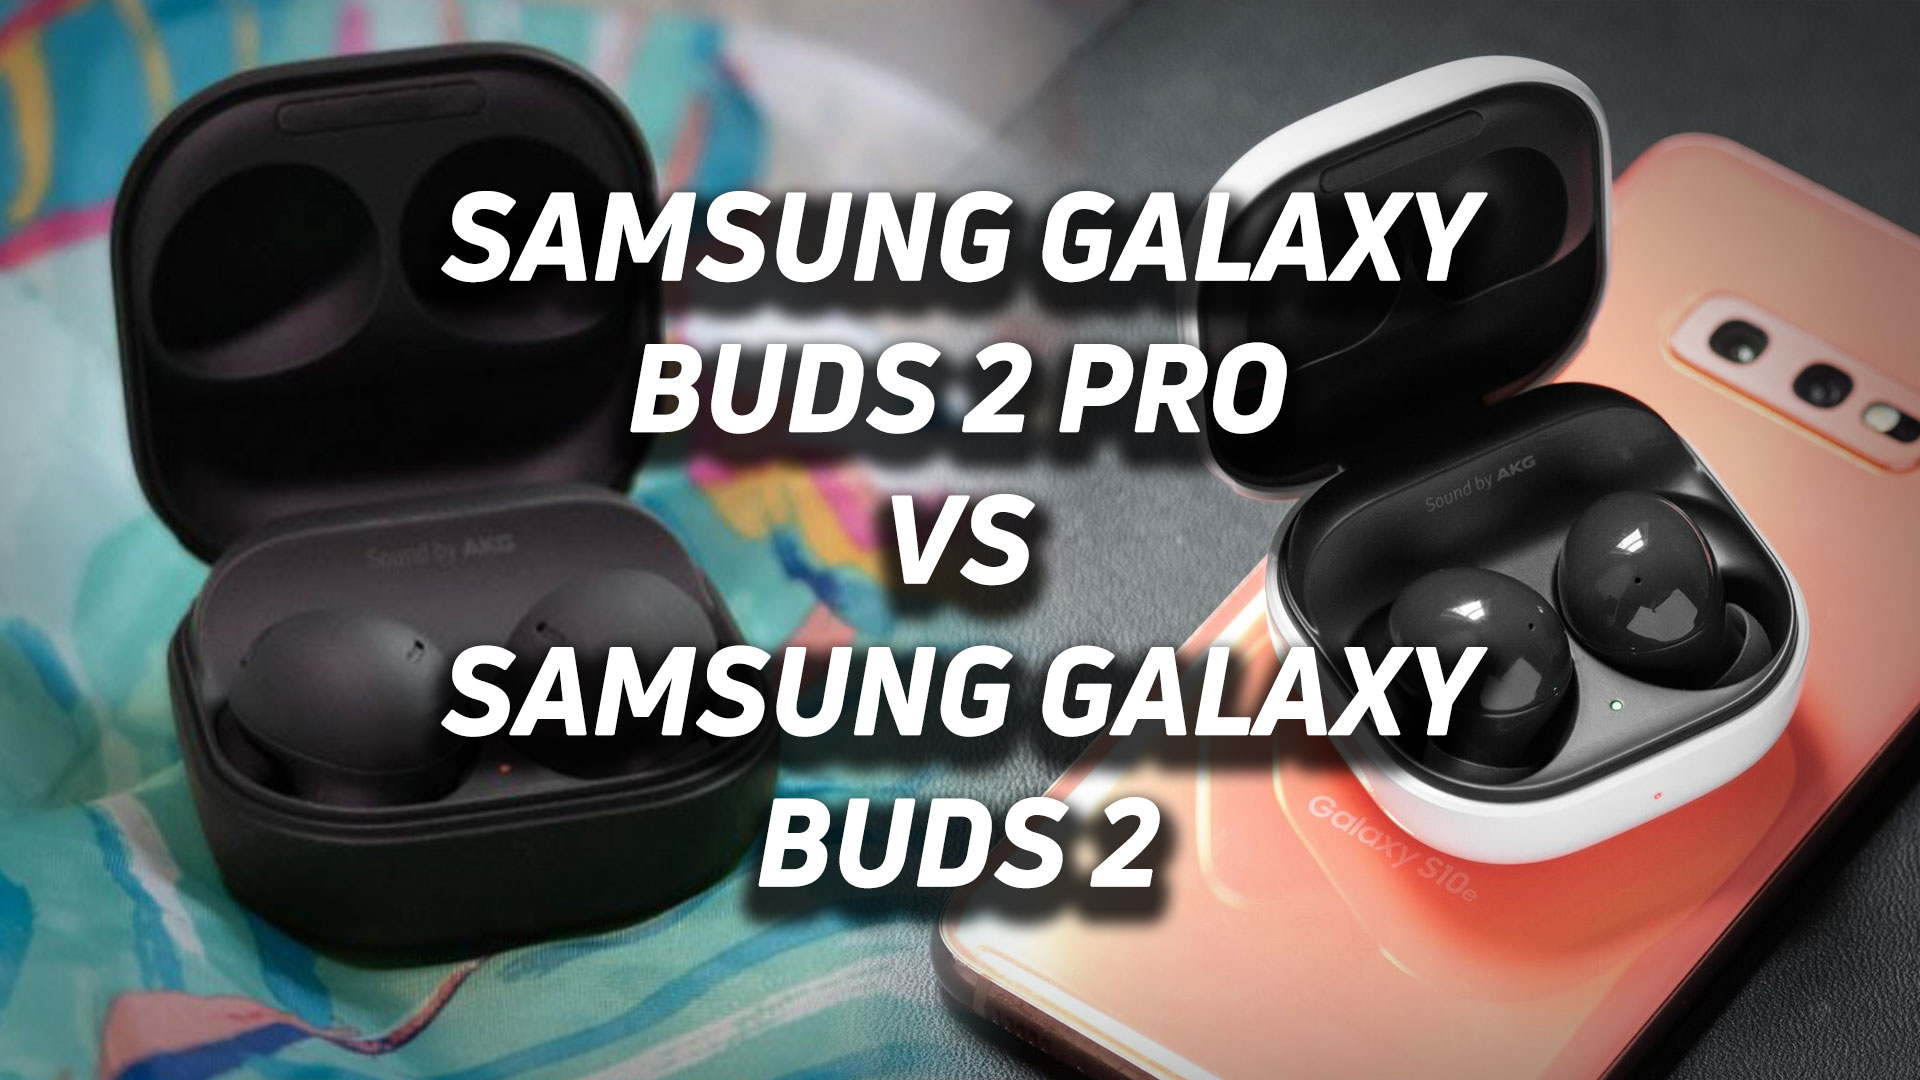 OnePlus Buds Pro 2 vs Samsung Galaxy Buds 2 Pro: Which wireless